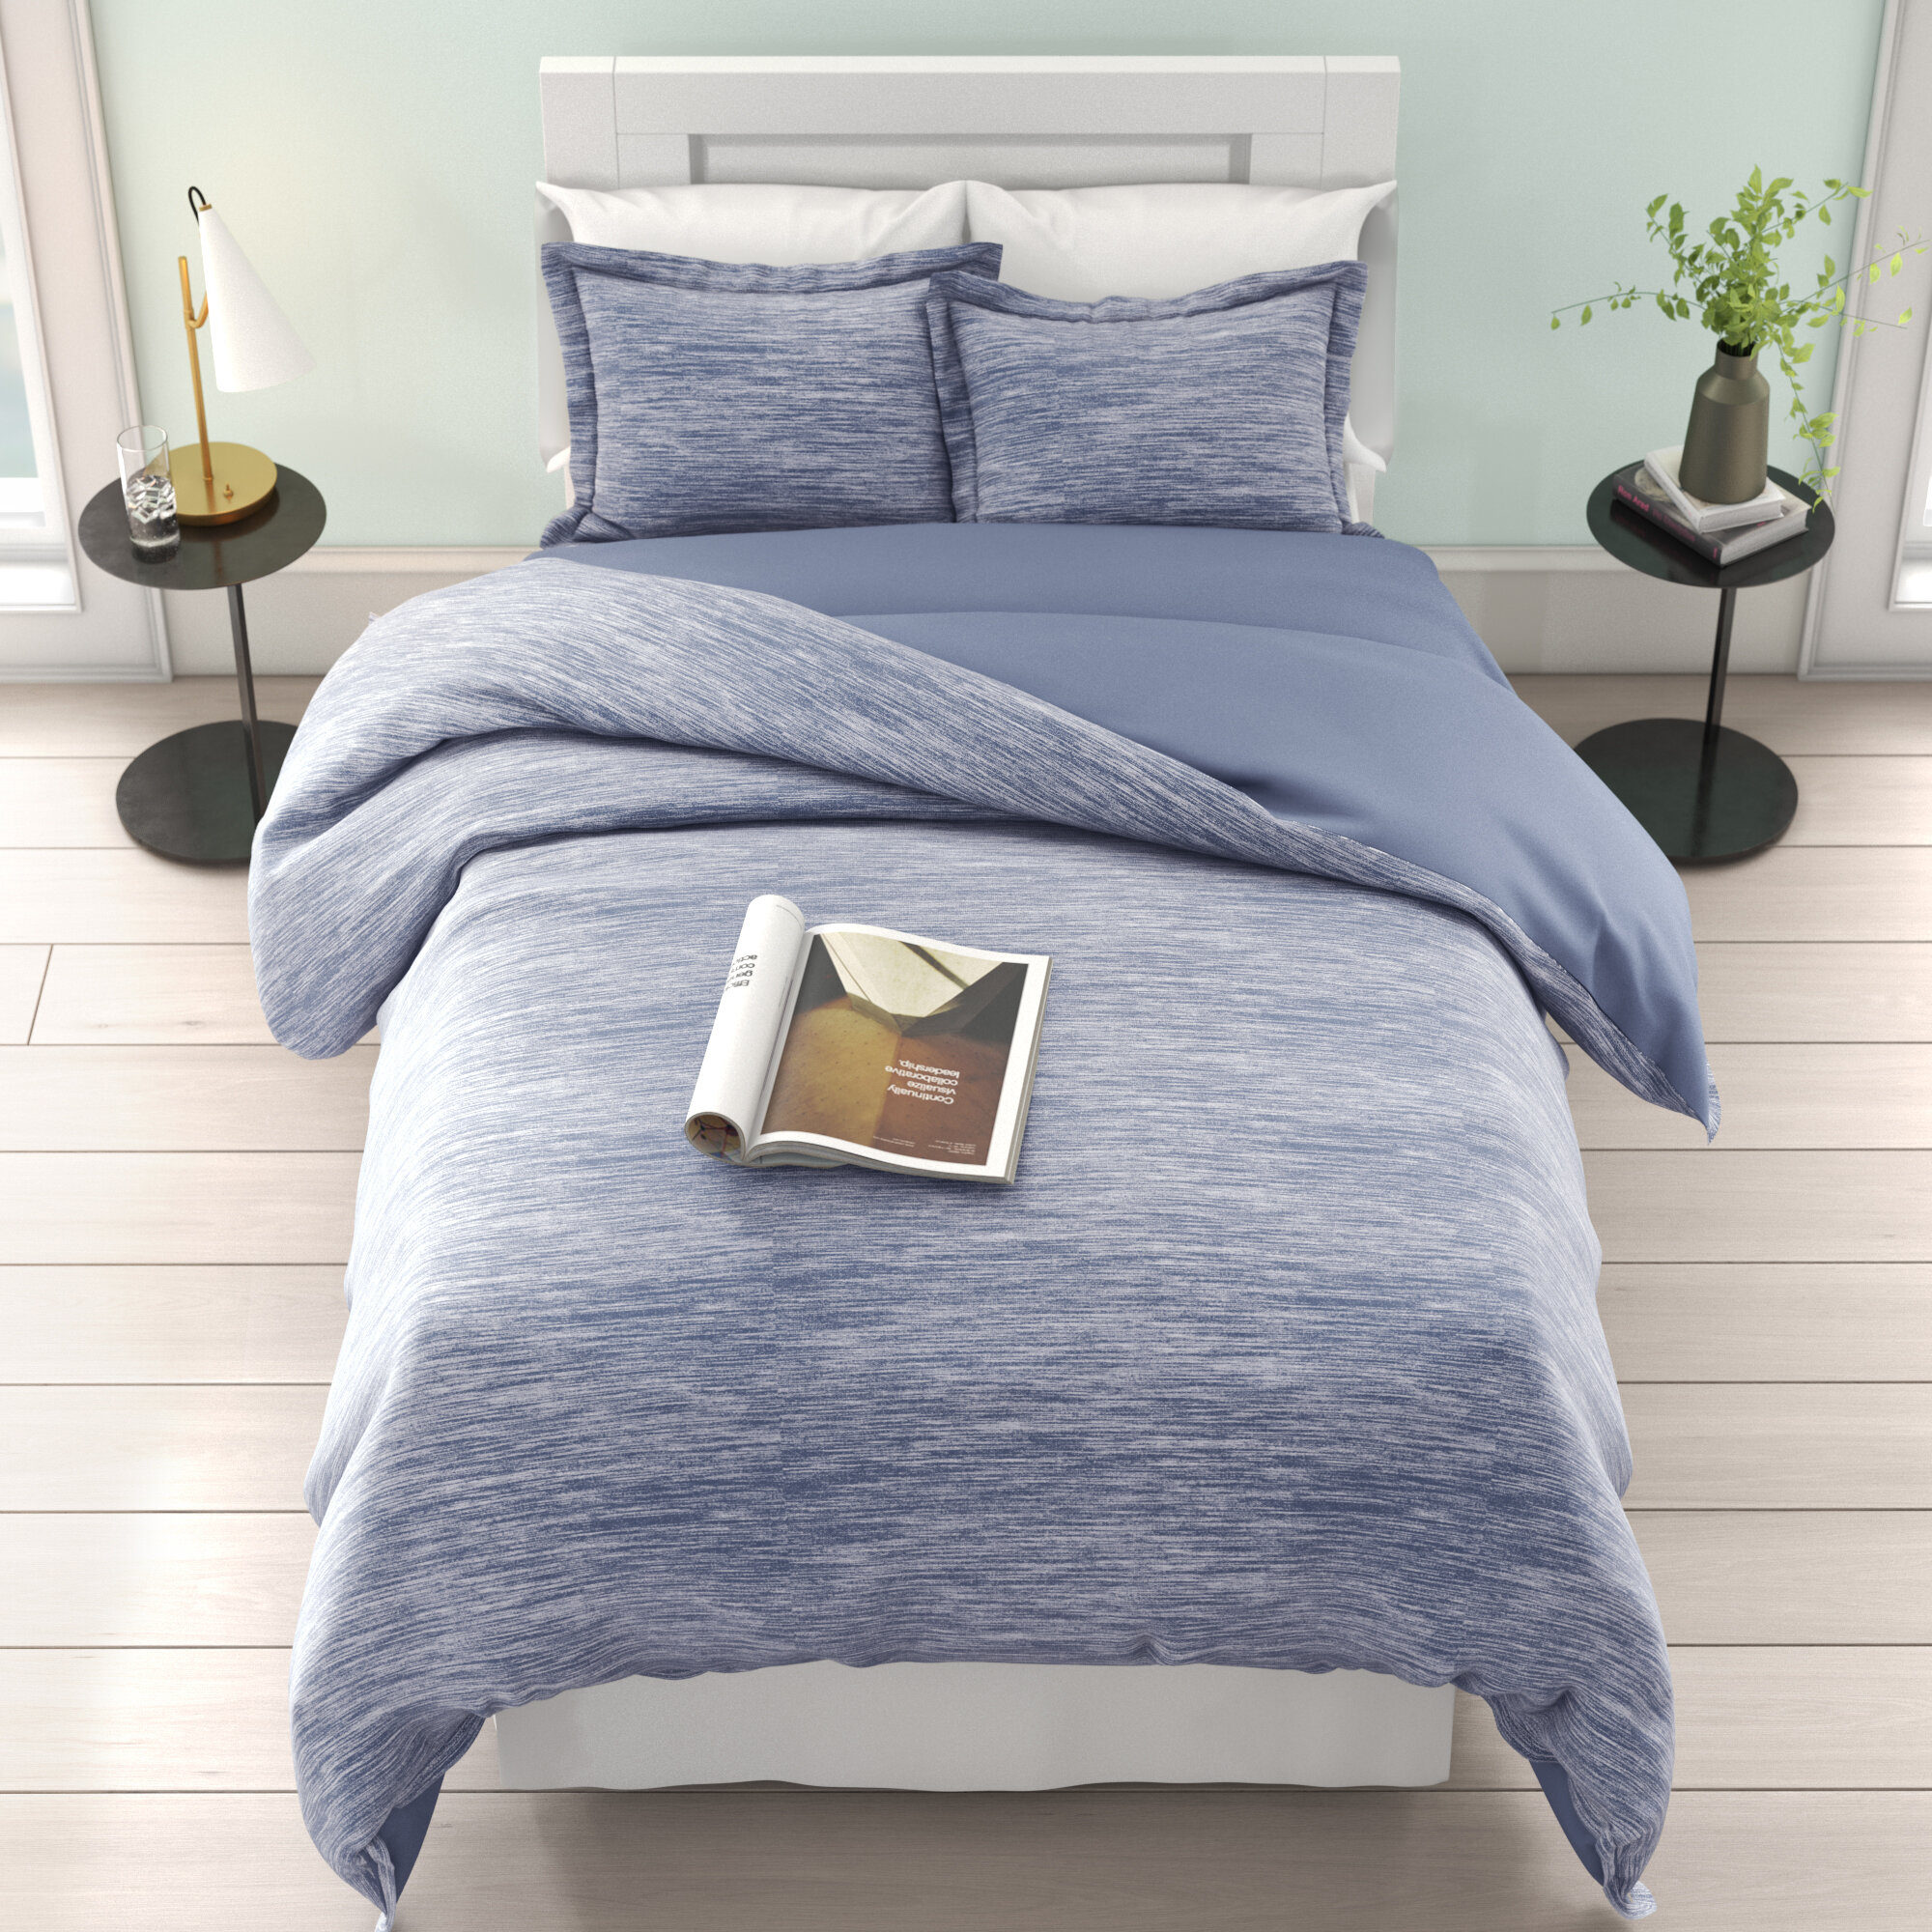 Modern Minimalist Bedding Sets Allmodern